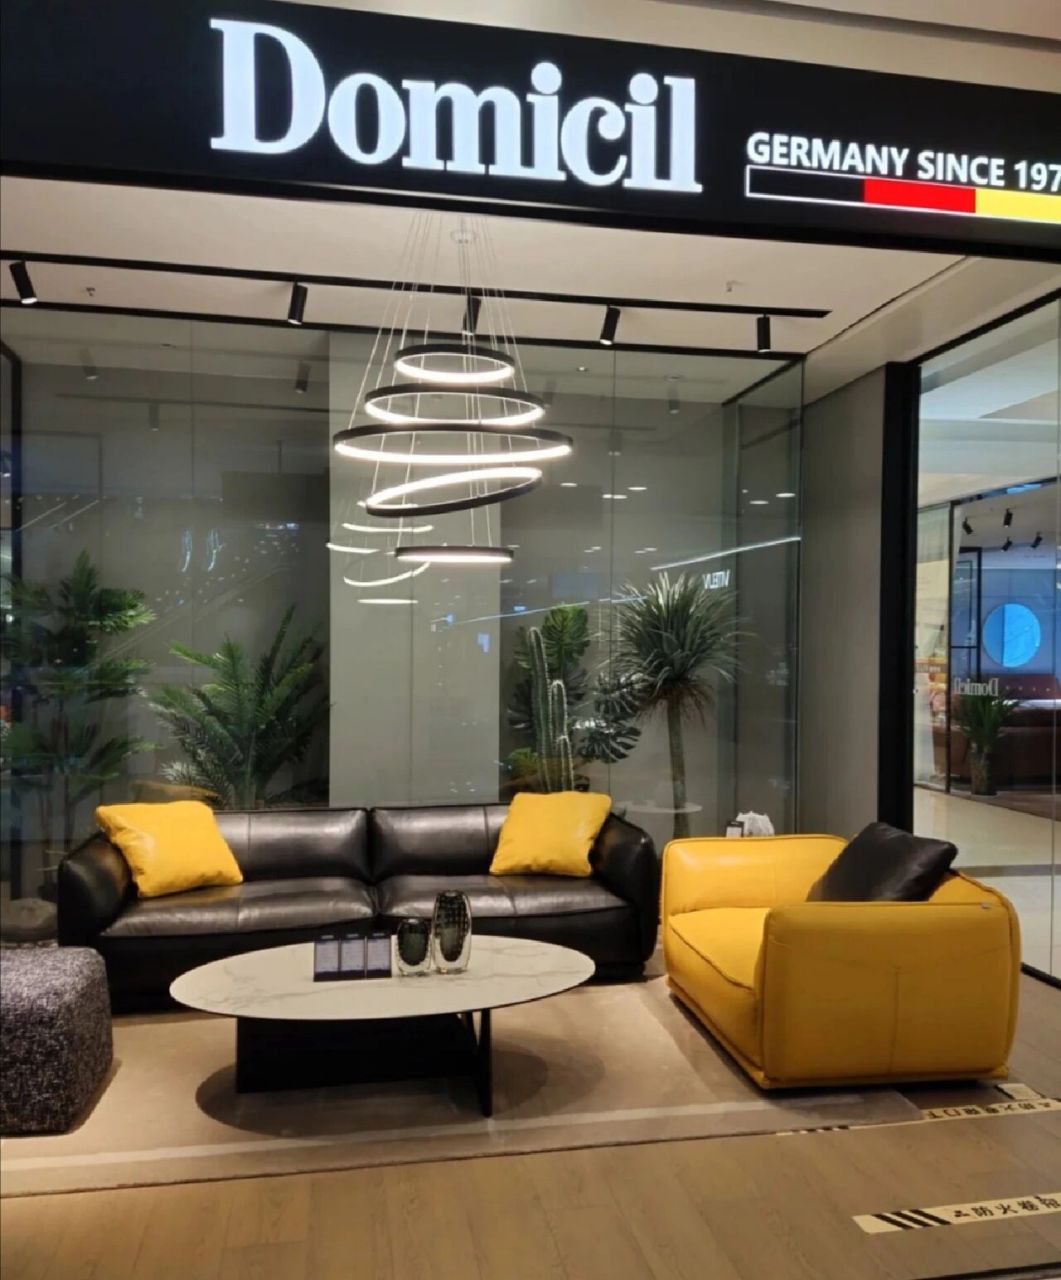 domicil 多米秀 德国9990经典沙发 domicil源于德国的品牌,意为